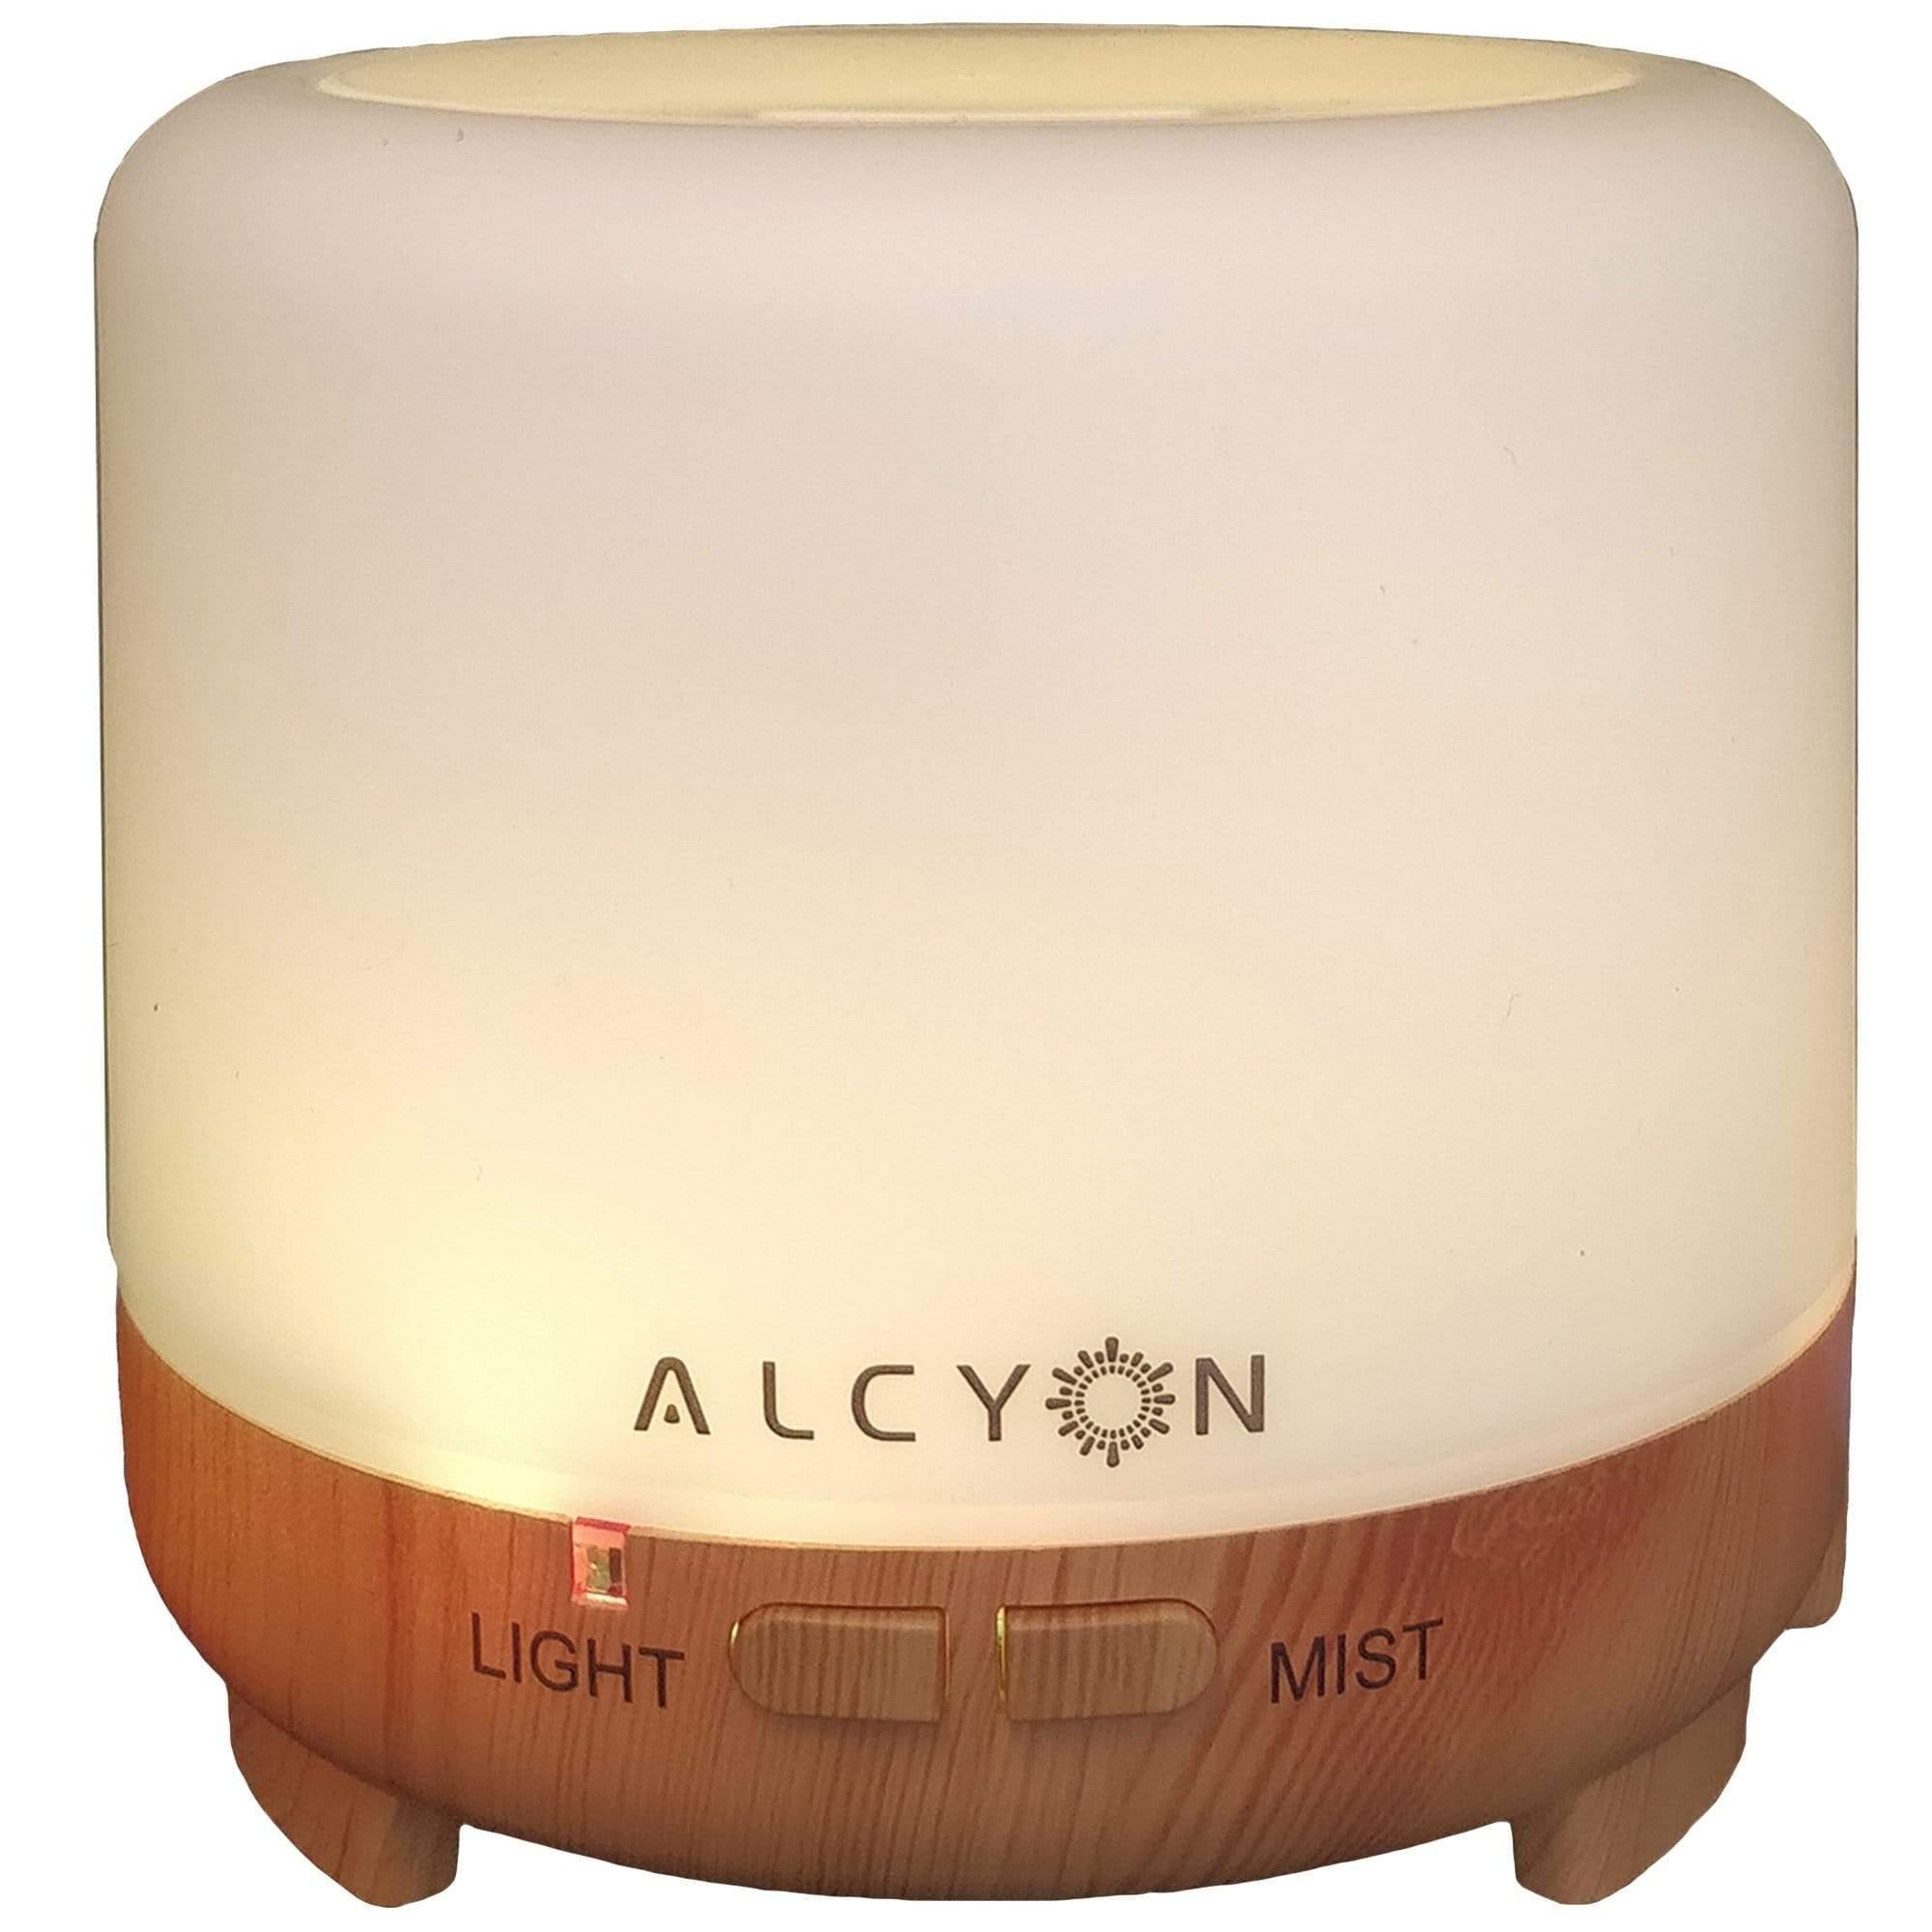 Alcyon Baby Miniko Aromatherapy Ultrasonic Diffuser - Inspire Me Naturally 